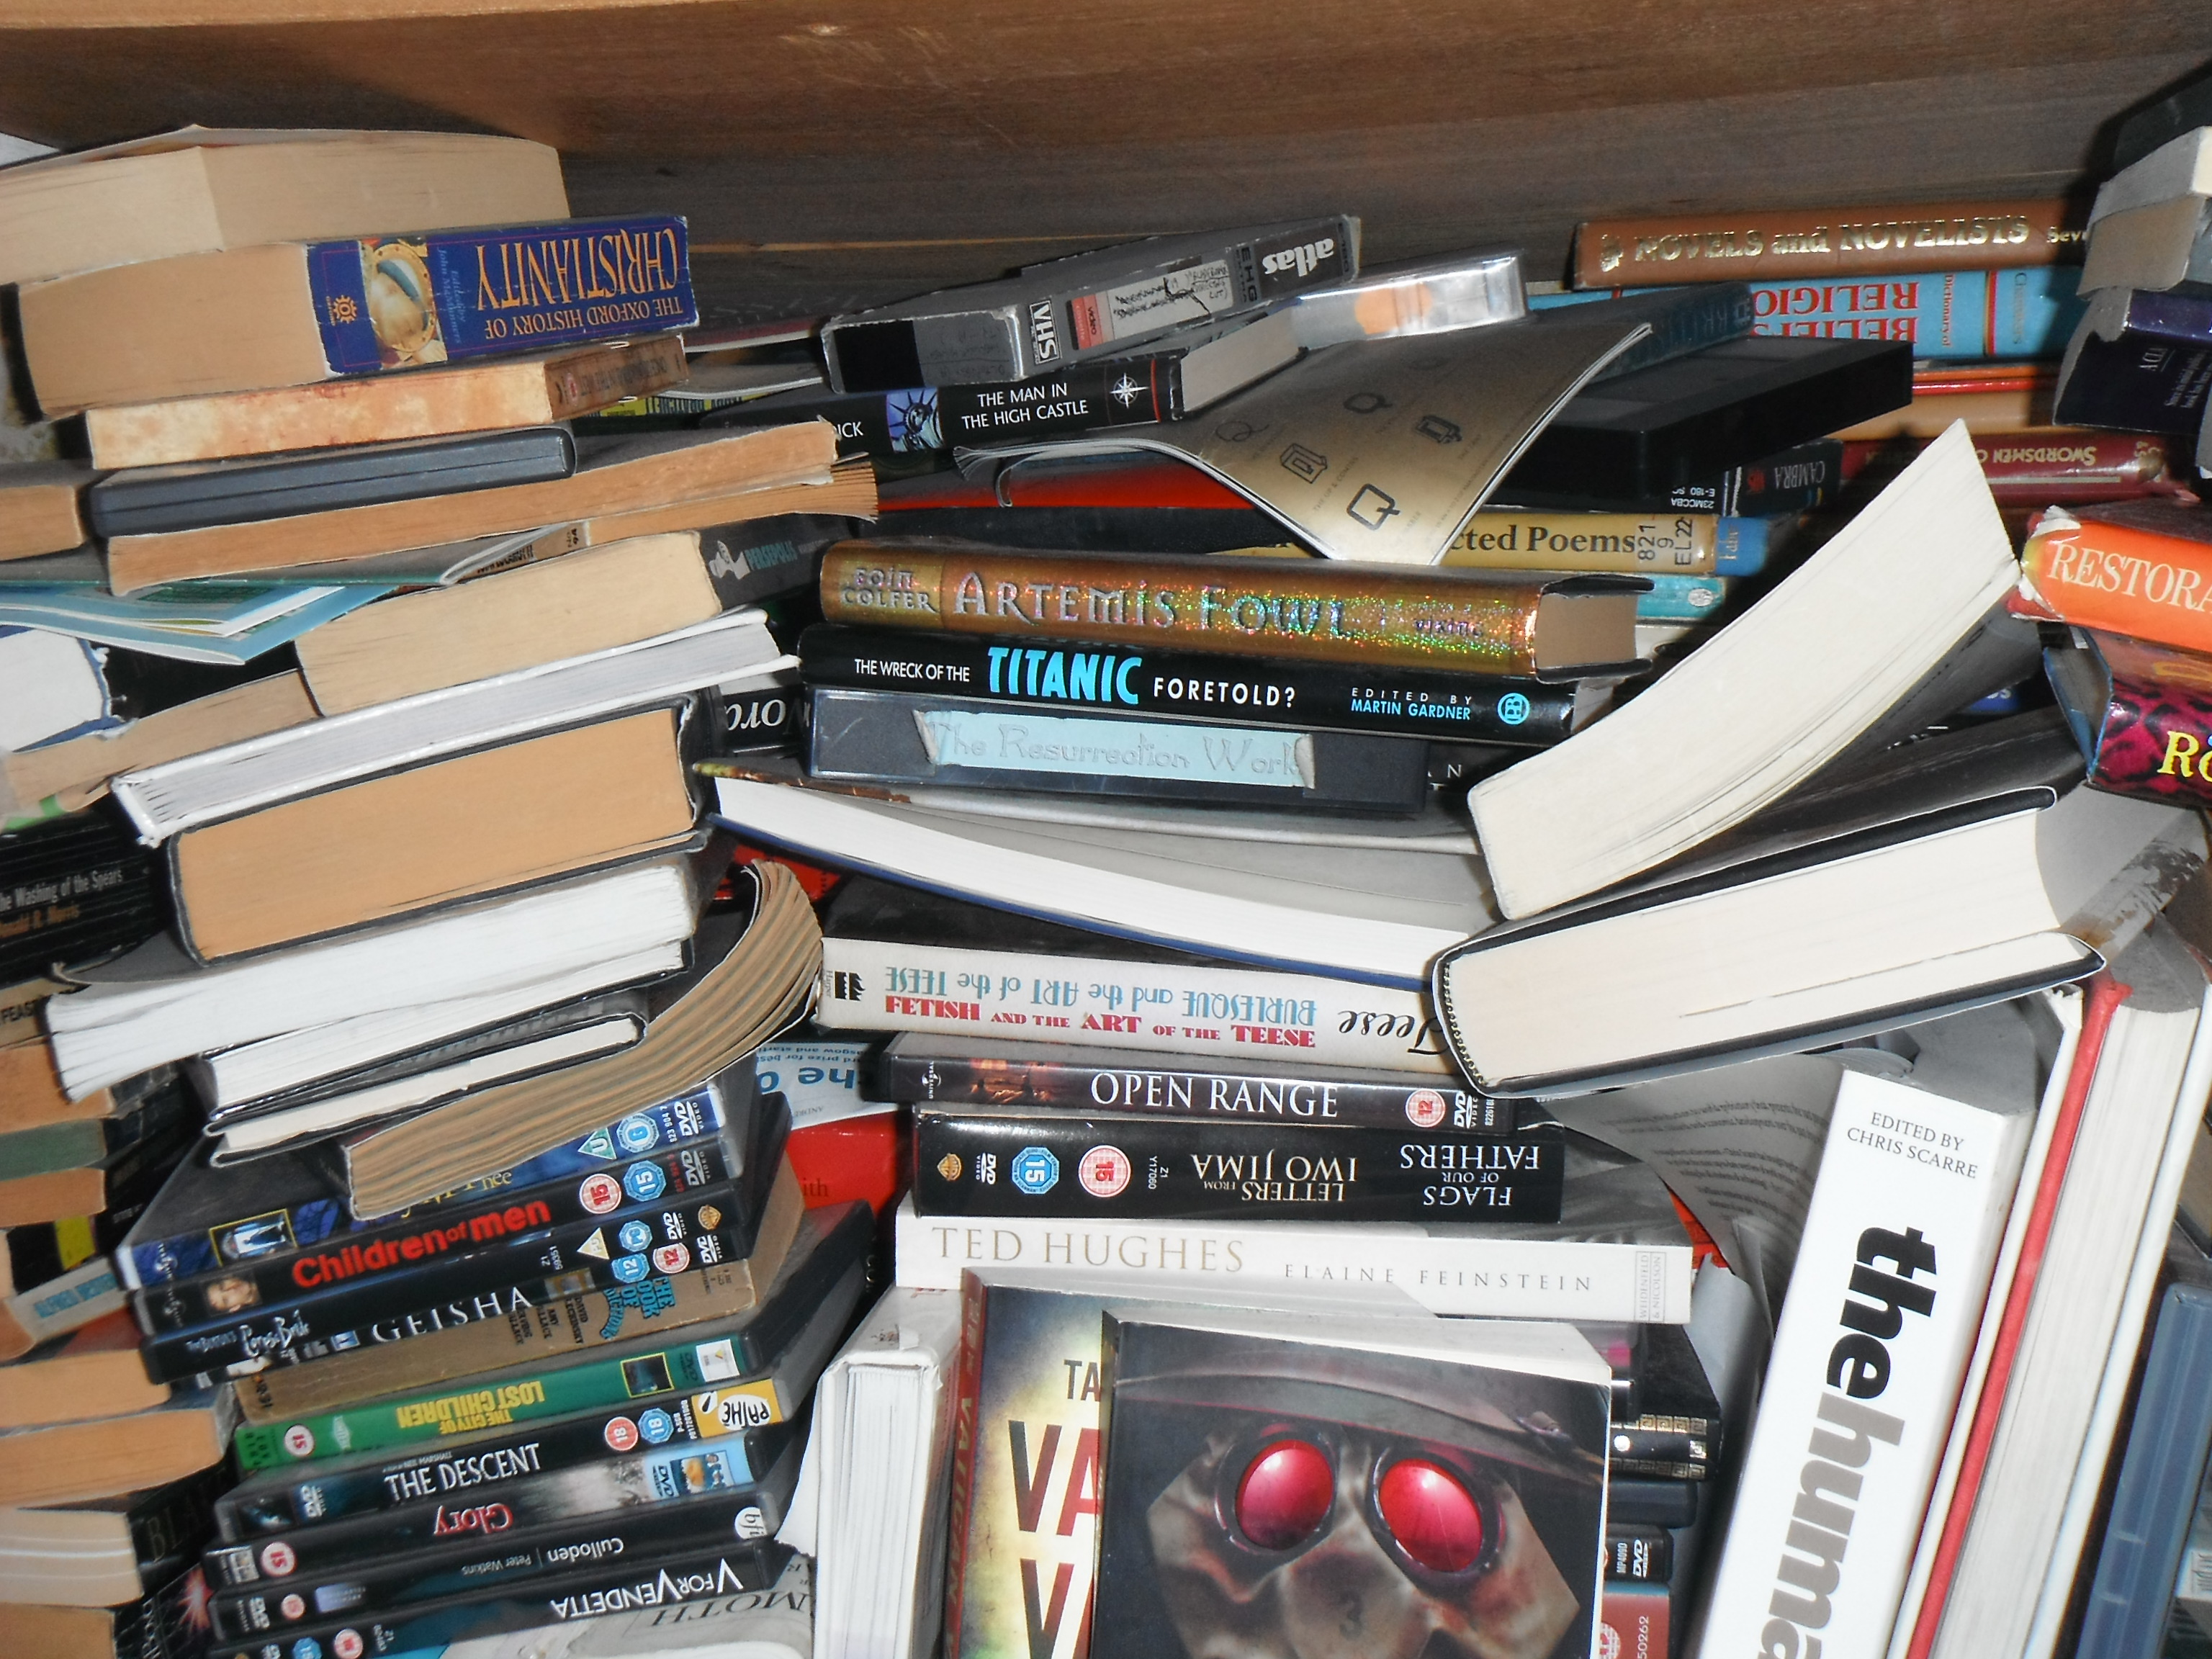 Photo taken by me – my book shelves